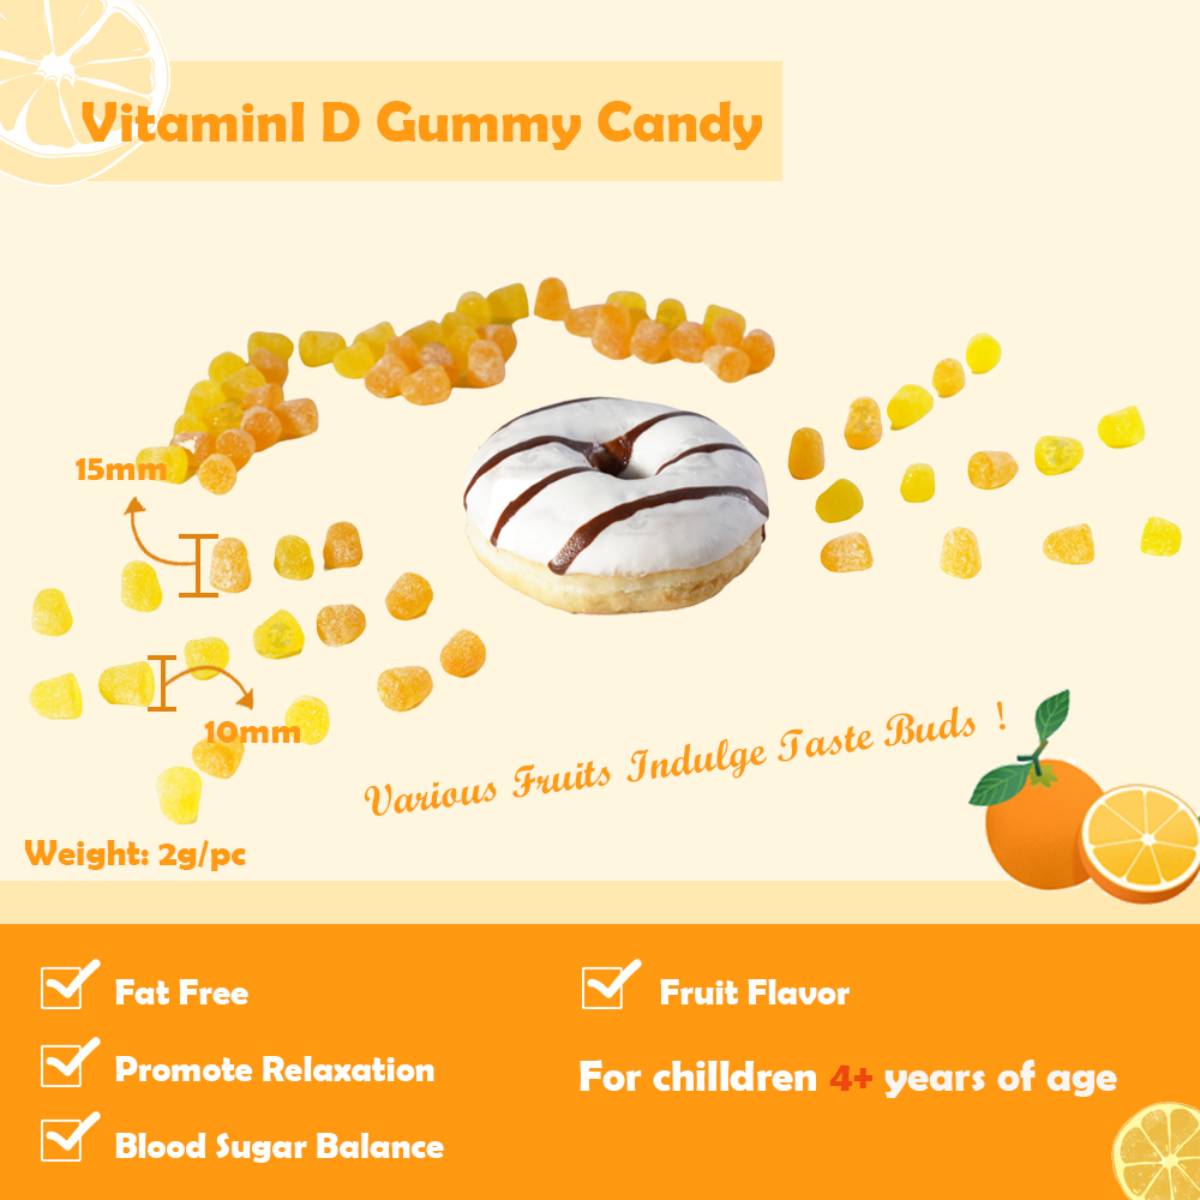 Vitamin D Gummy Candy